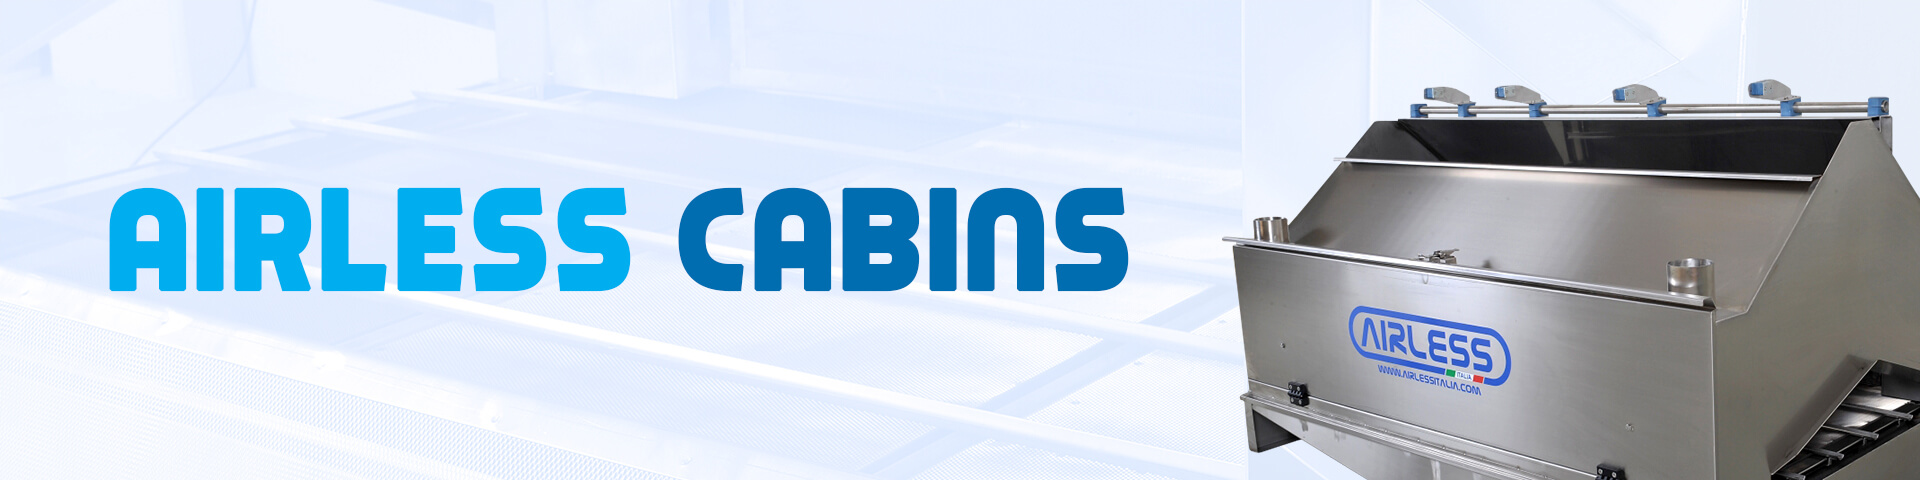 cabine capanni airless